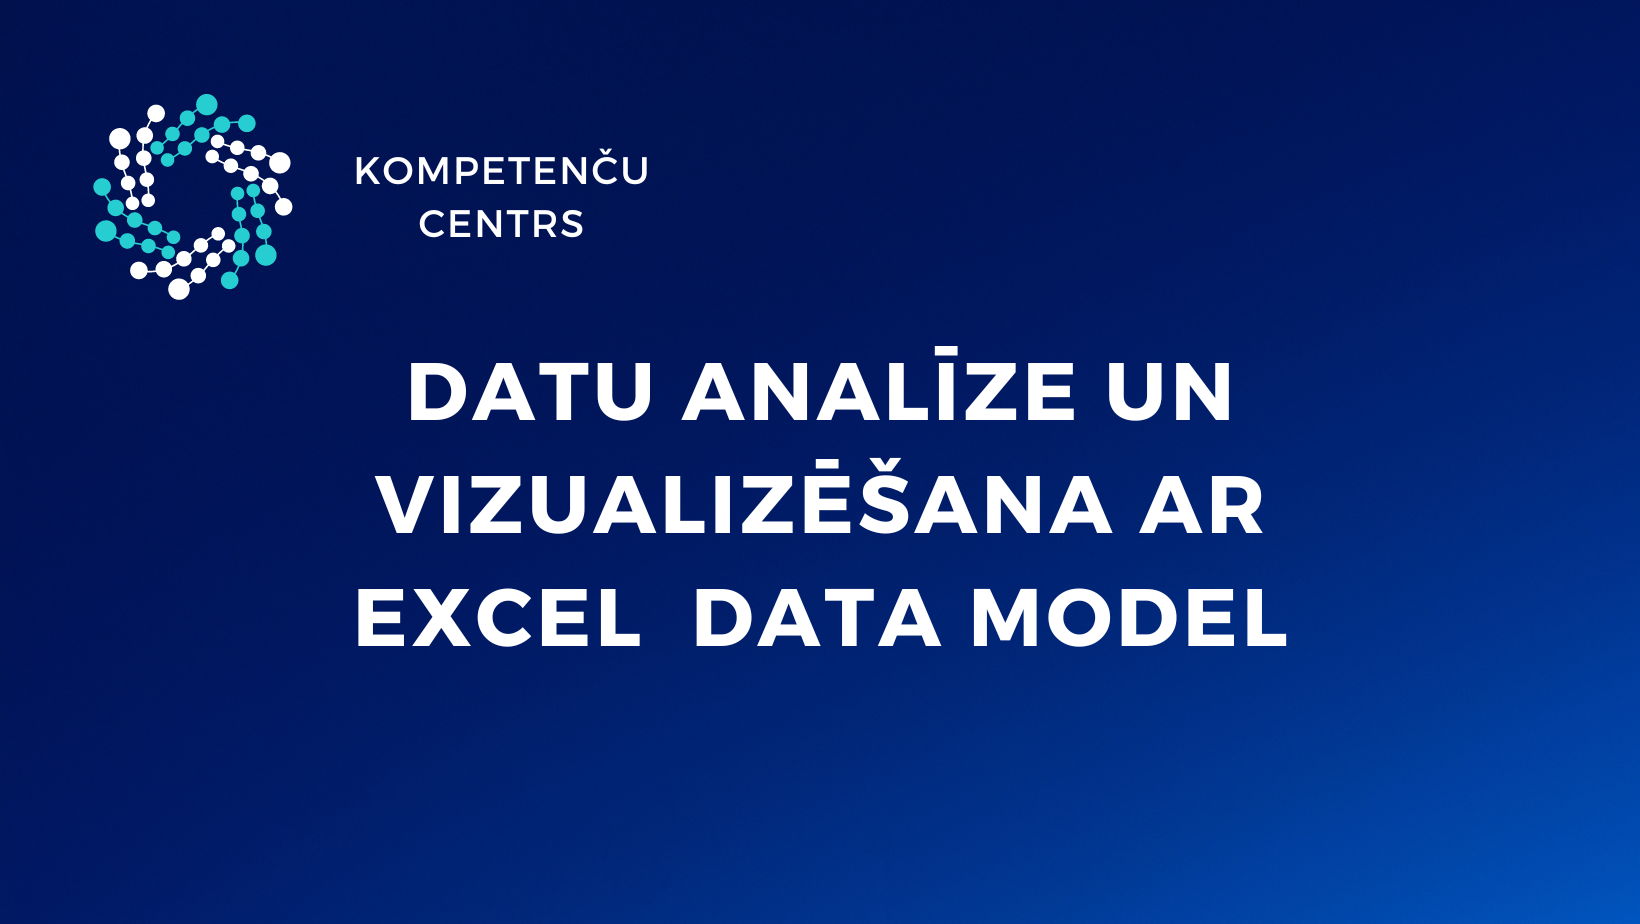 Datu analīze un vizualizēšana ar Excel data model